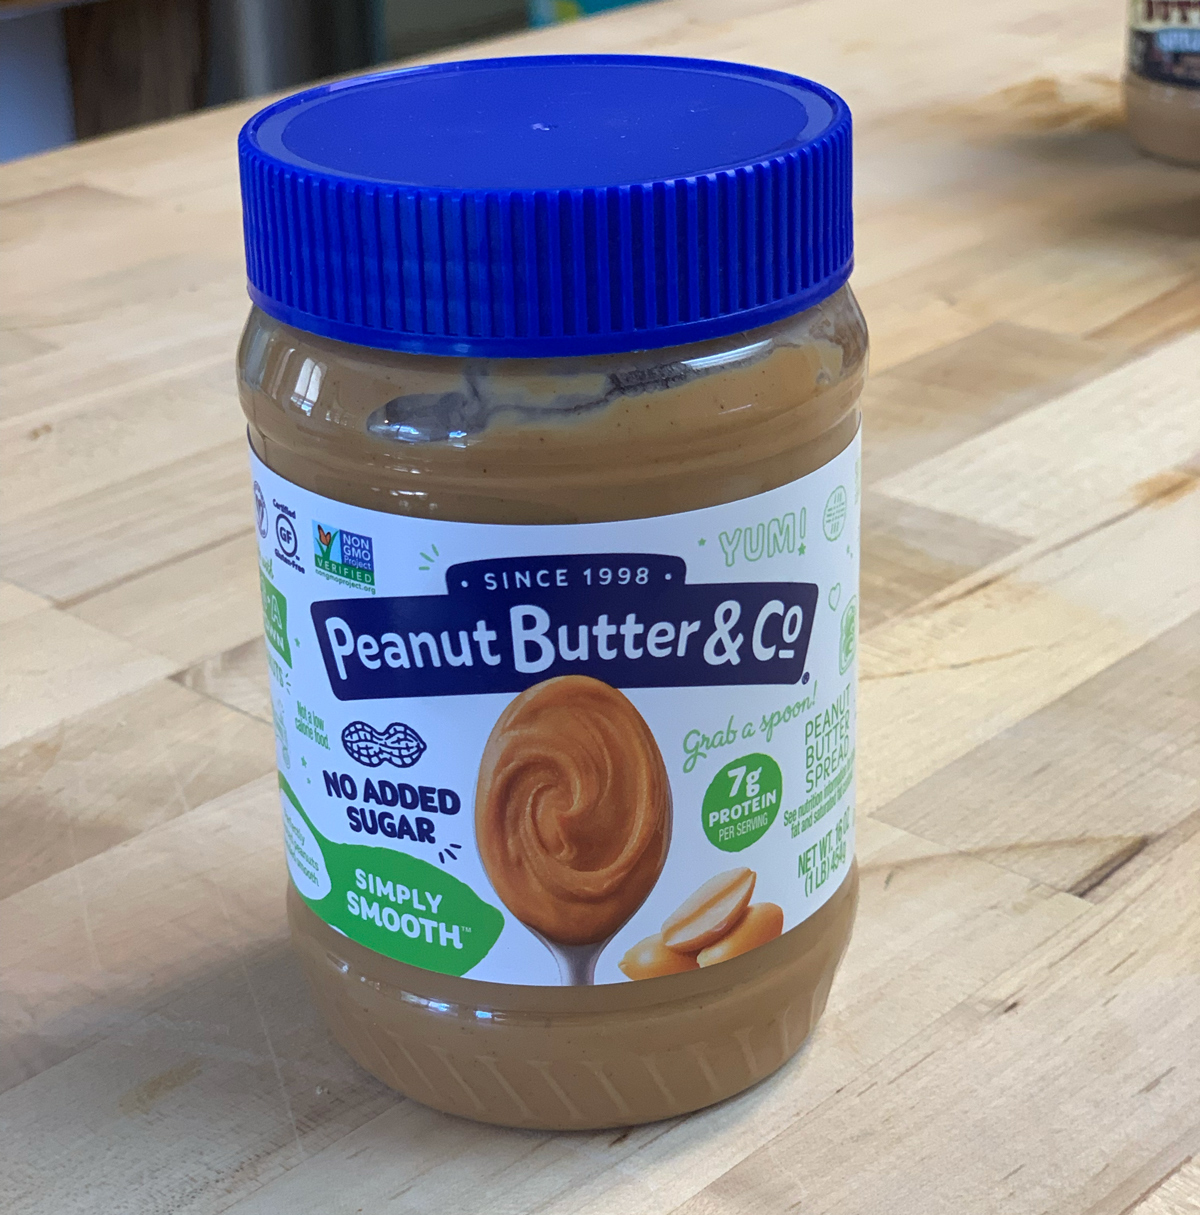 Peanut butter & co